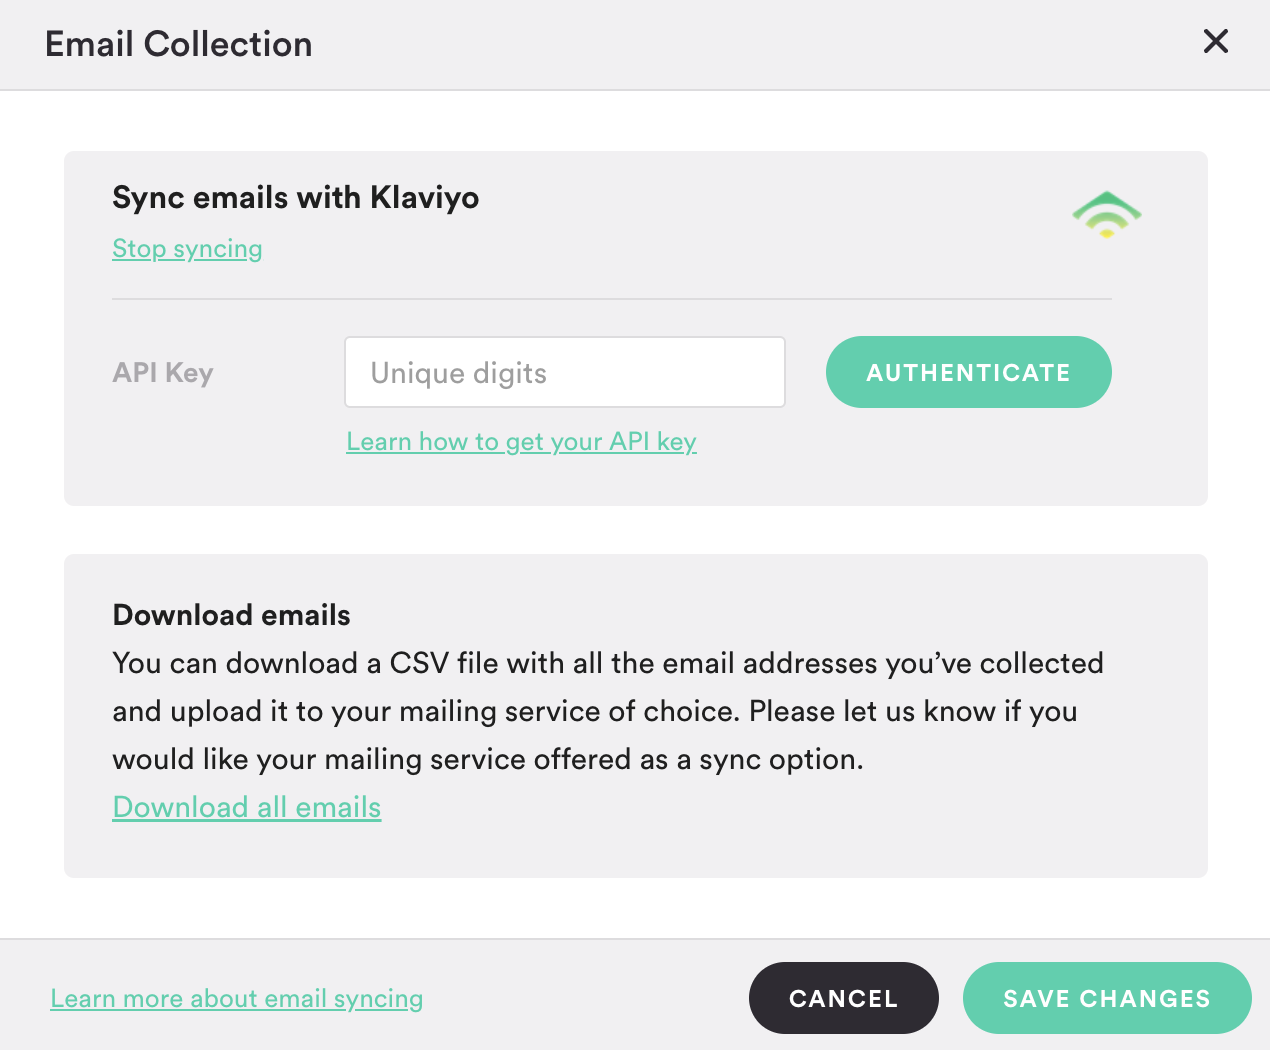 A page where Klaviyo’s API key can be authenticated.